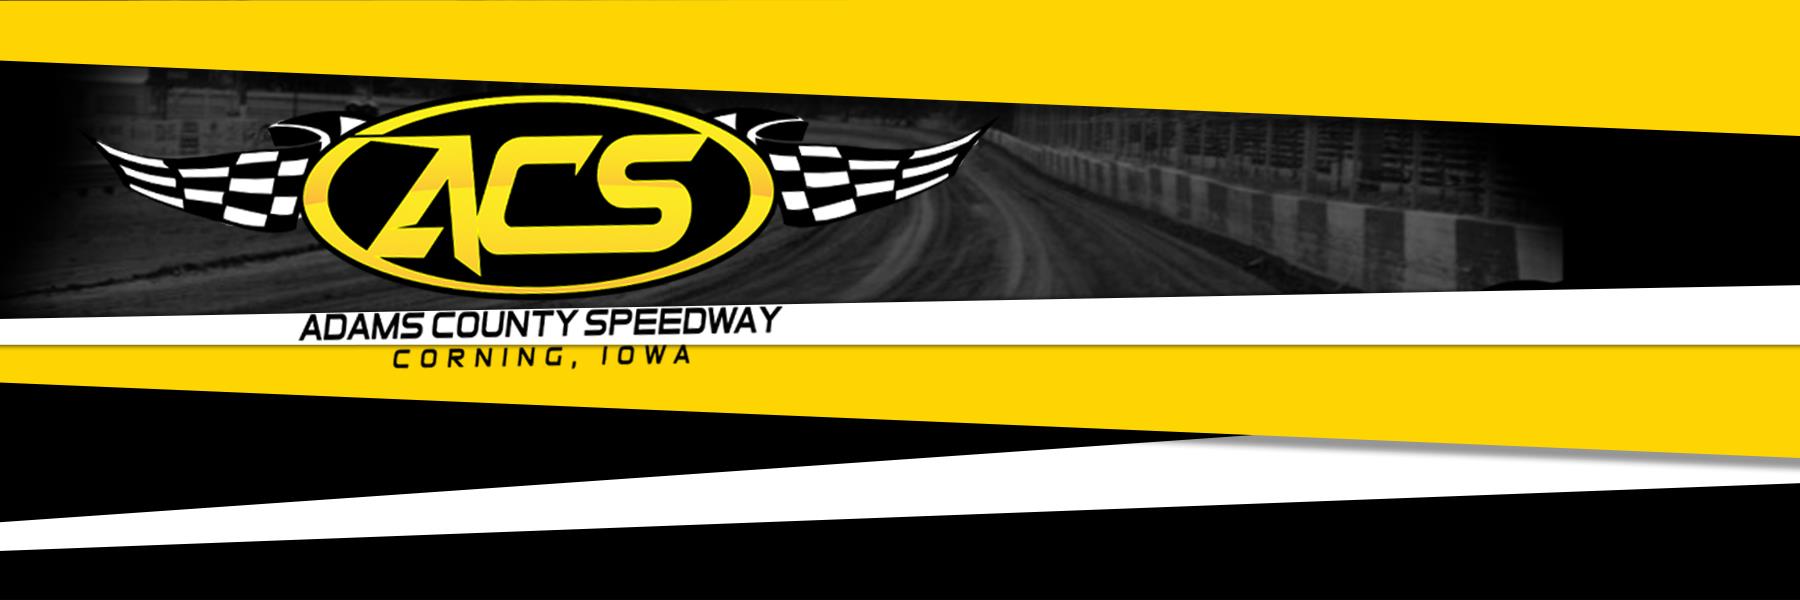 7/2/2022 - Adams County Speedway